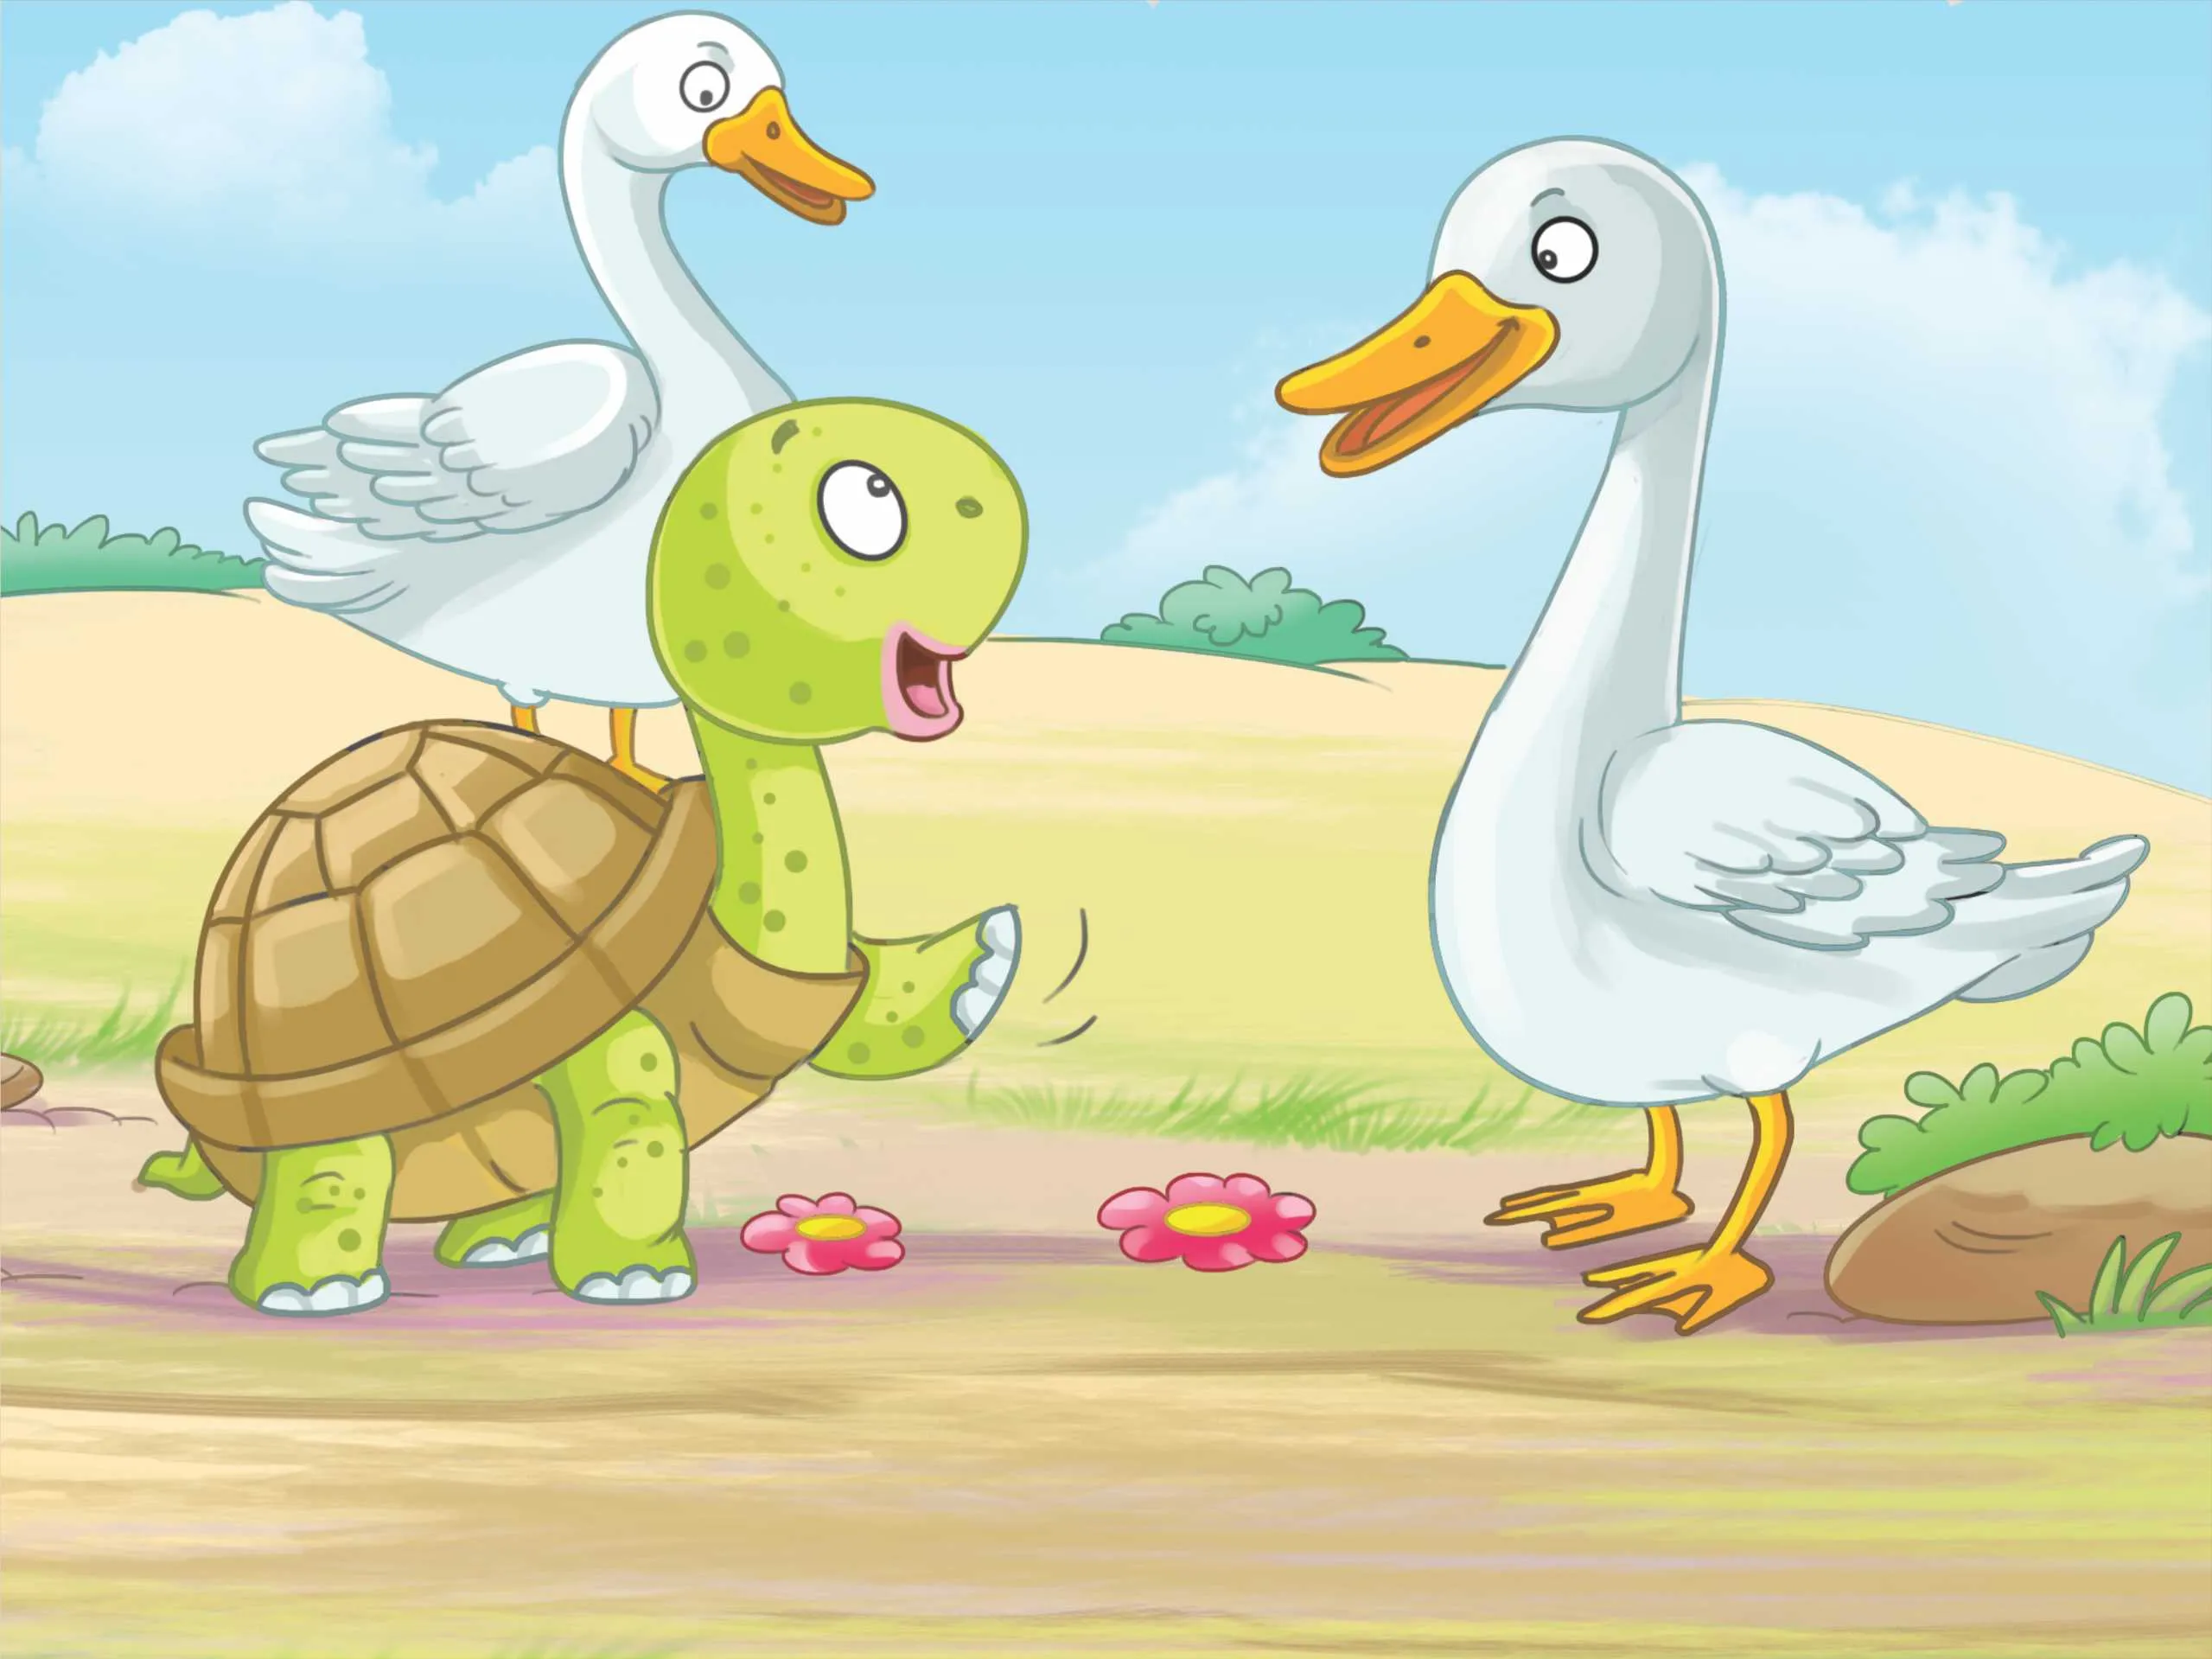 Tortoise and Swan cartoon image